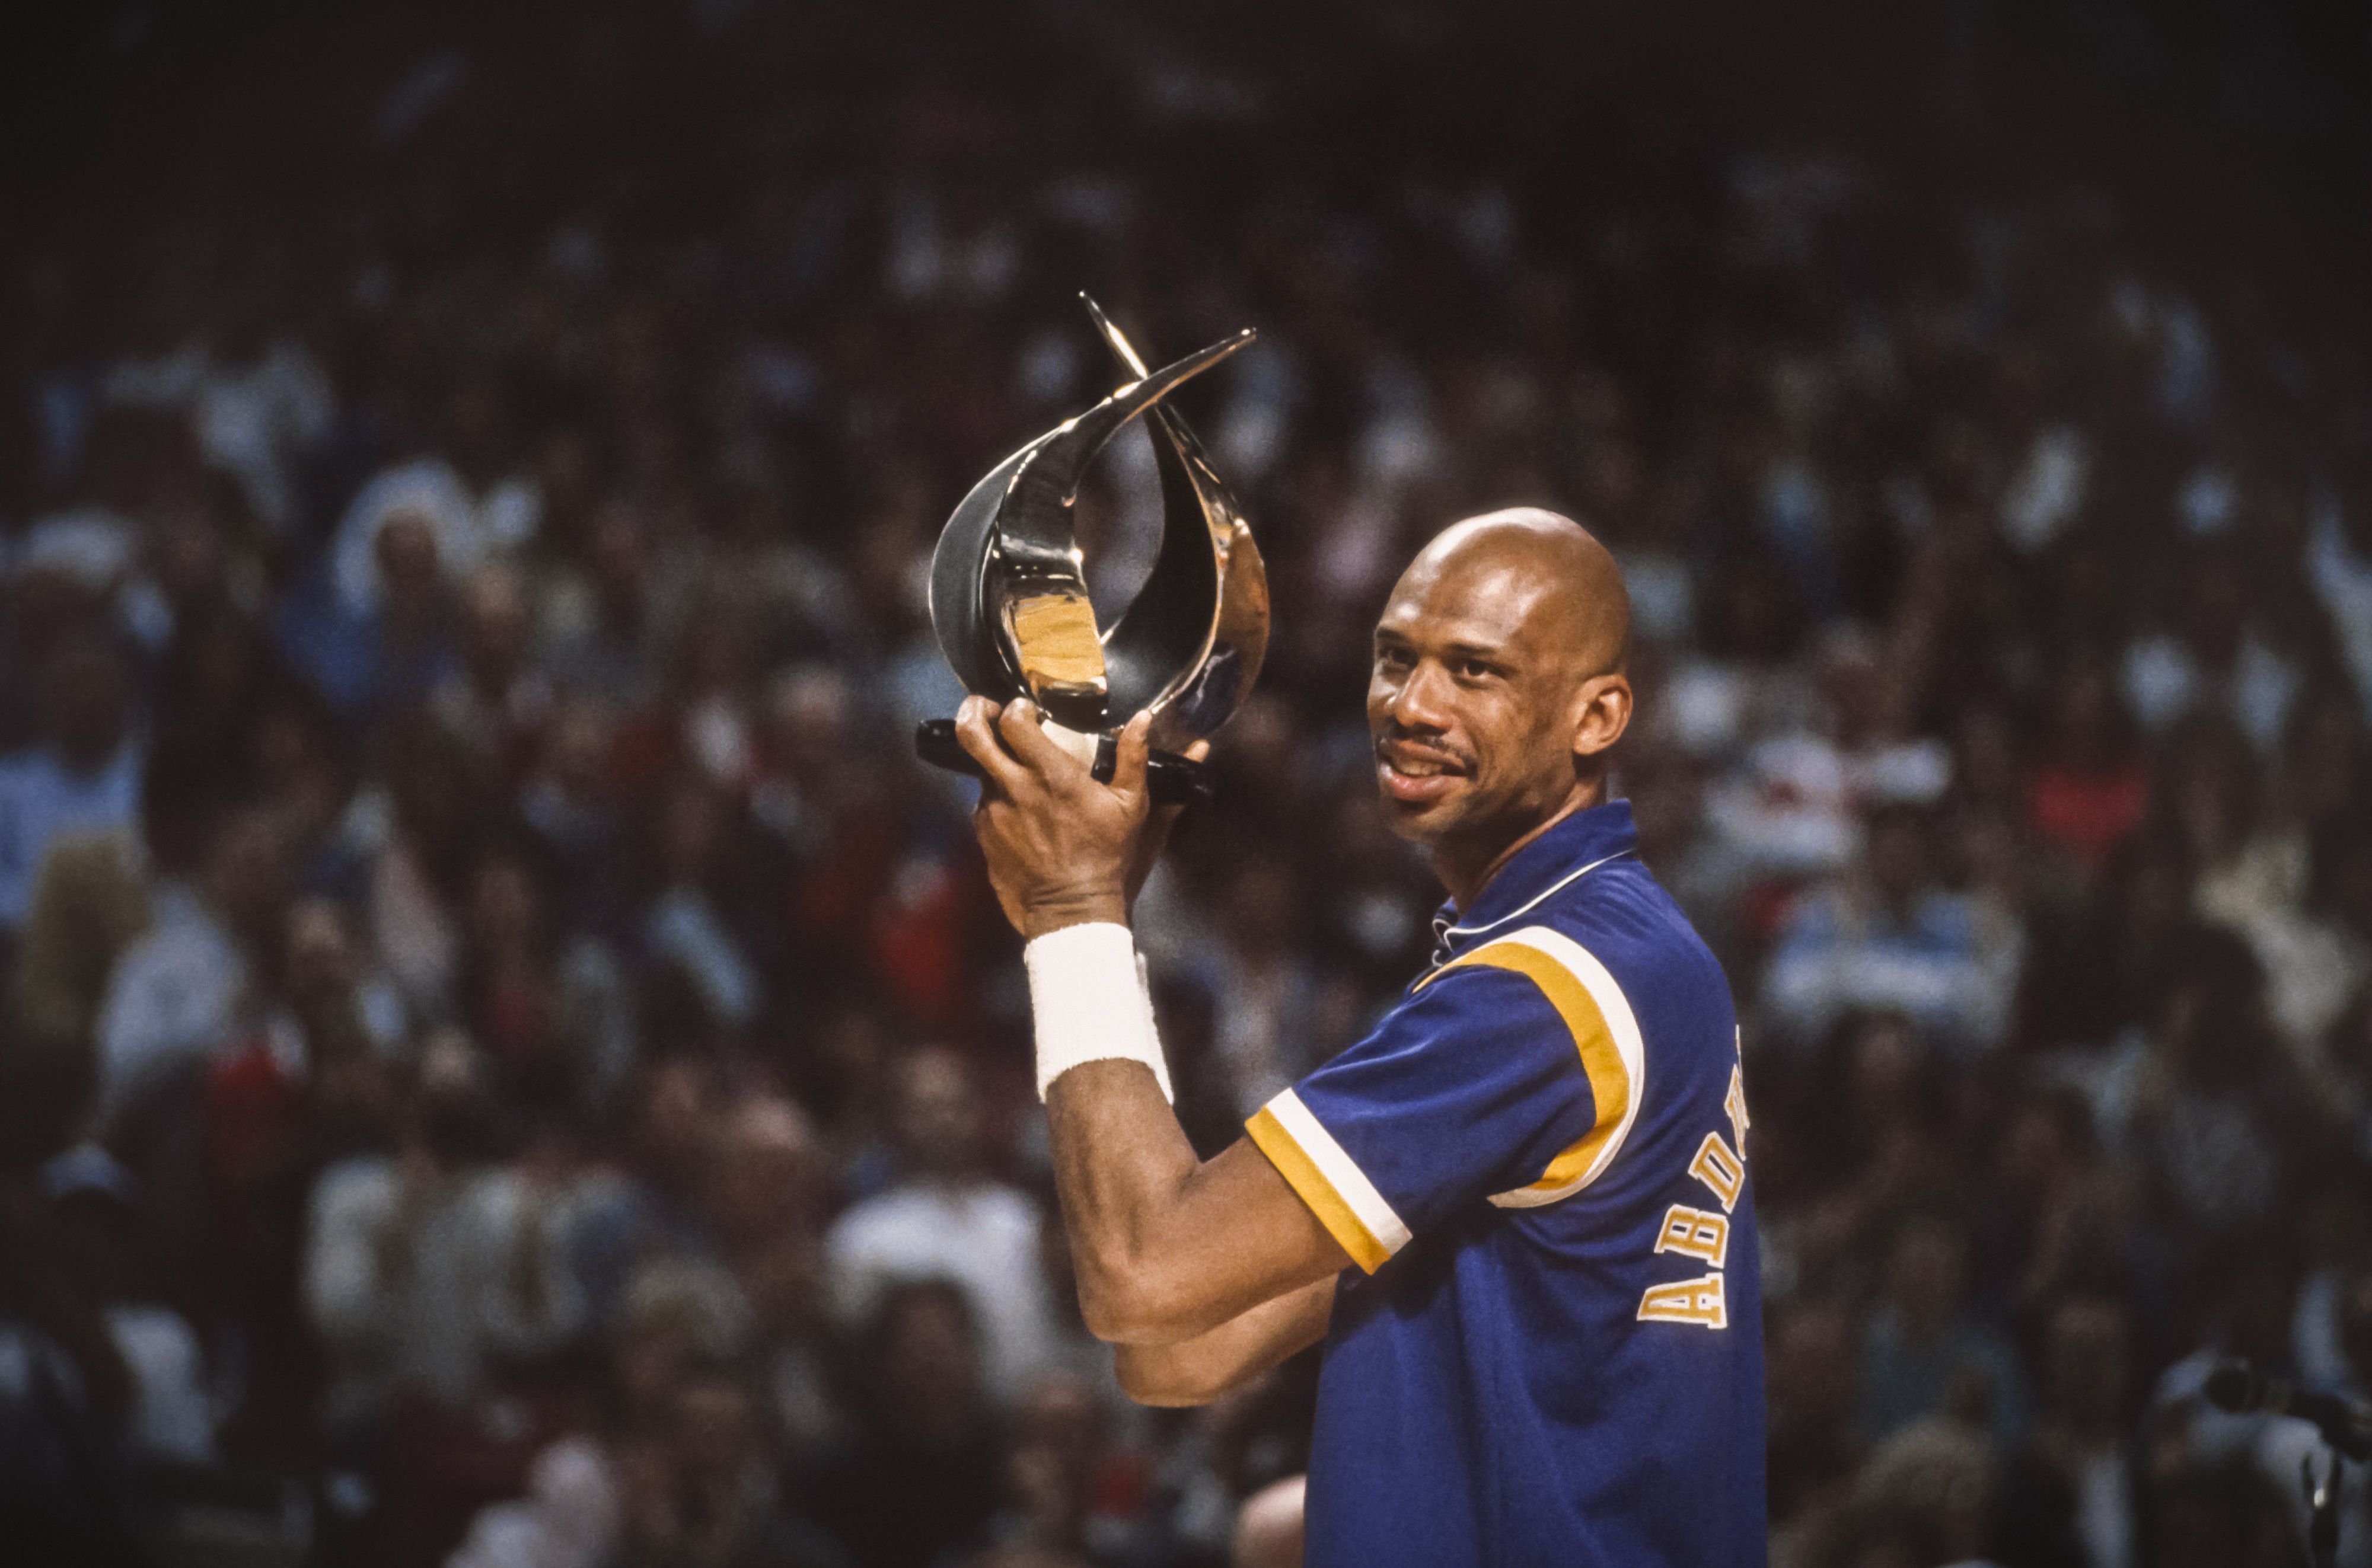 Kareem Abdul-Jabbar: The Biography Of An NBA Champion, Civil